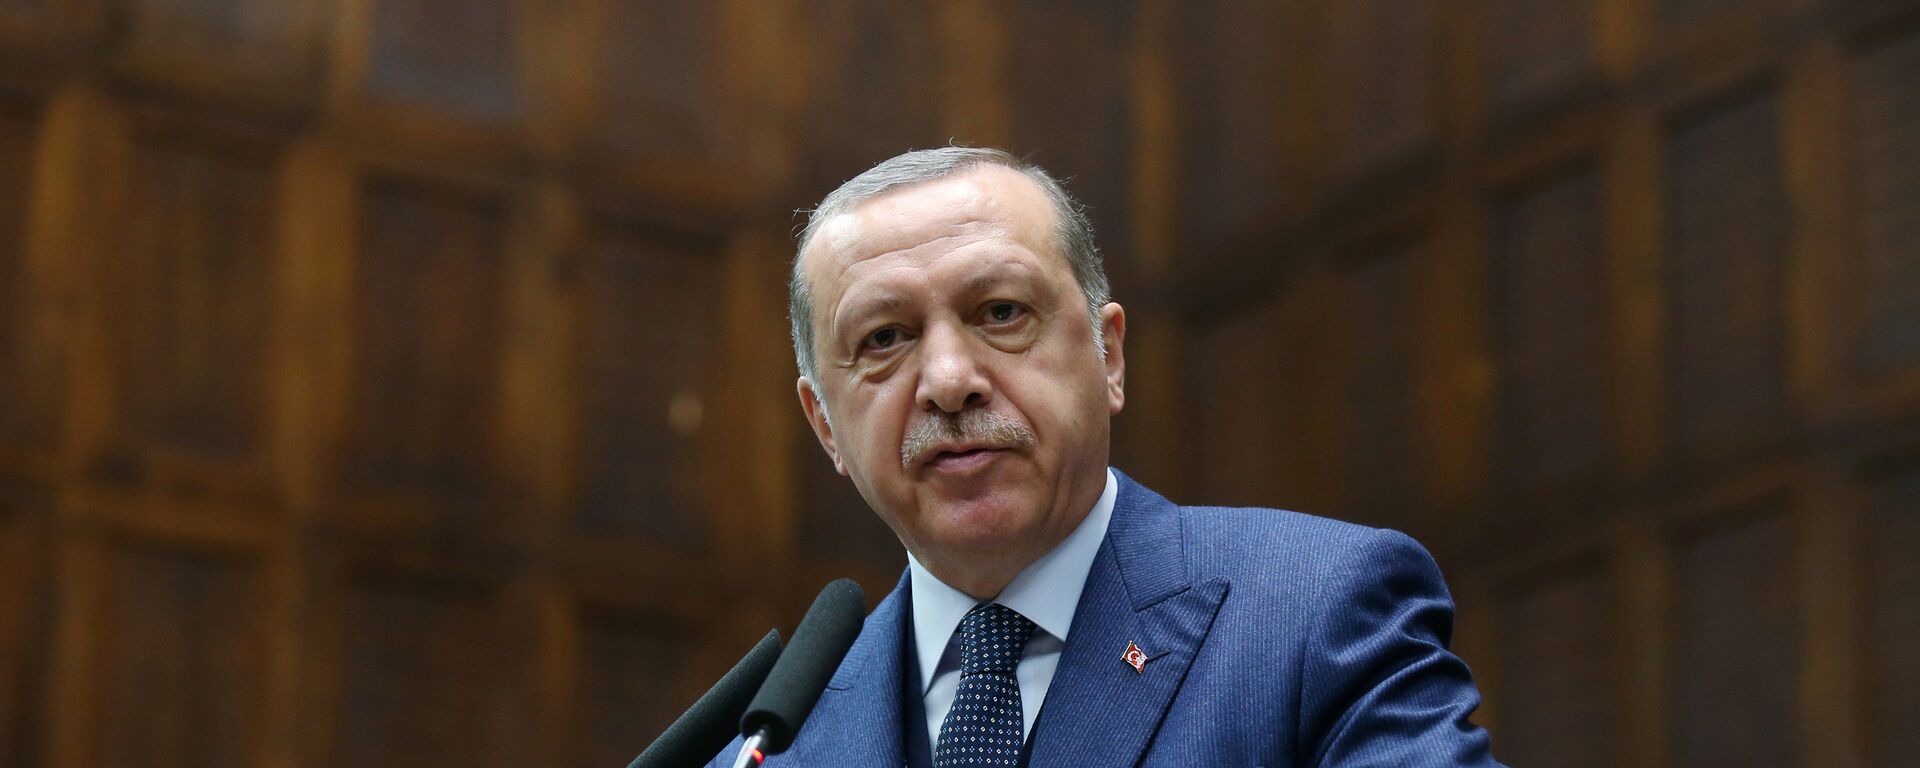 Turkish President Tayyip Erdogan addresses members of parliament from his ruling AK Party (AKP) during a meeting at the Turkish parliament in Ankara, Turkey, June 13, 2017 - Sputnik International, 1920, 18.08.2018